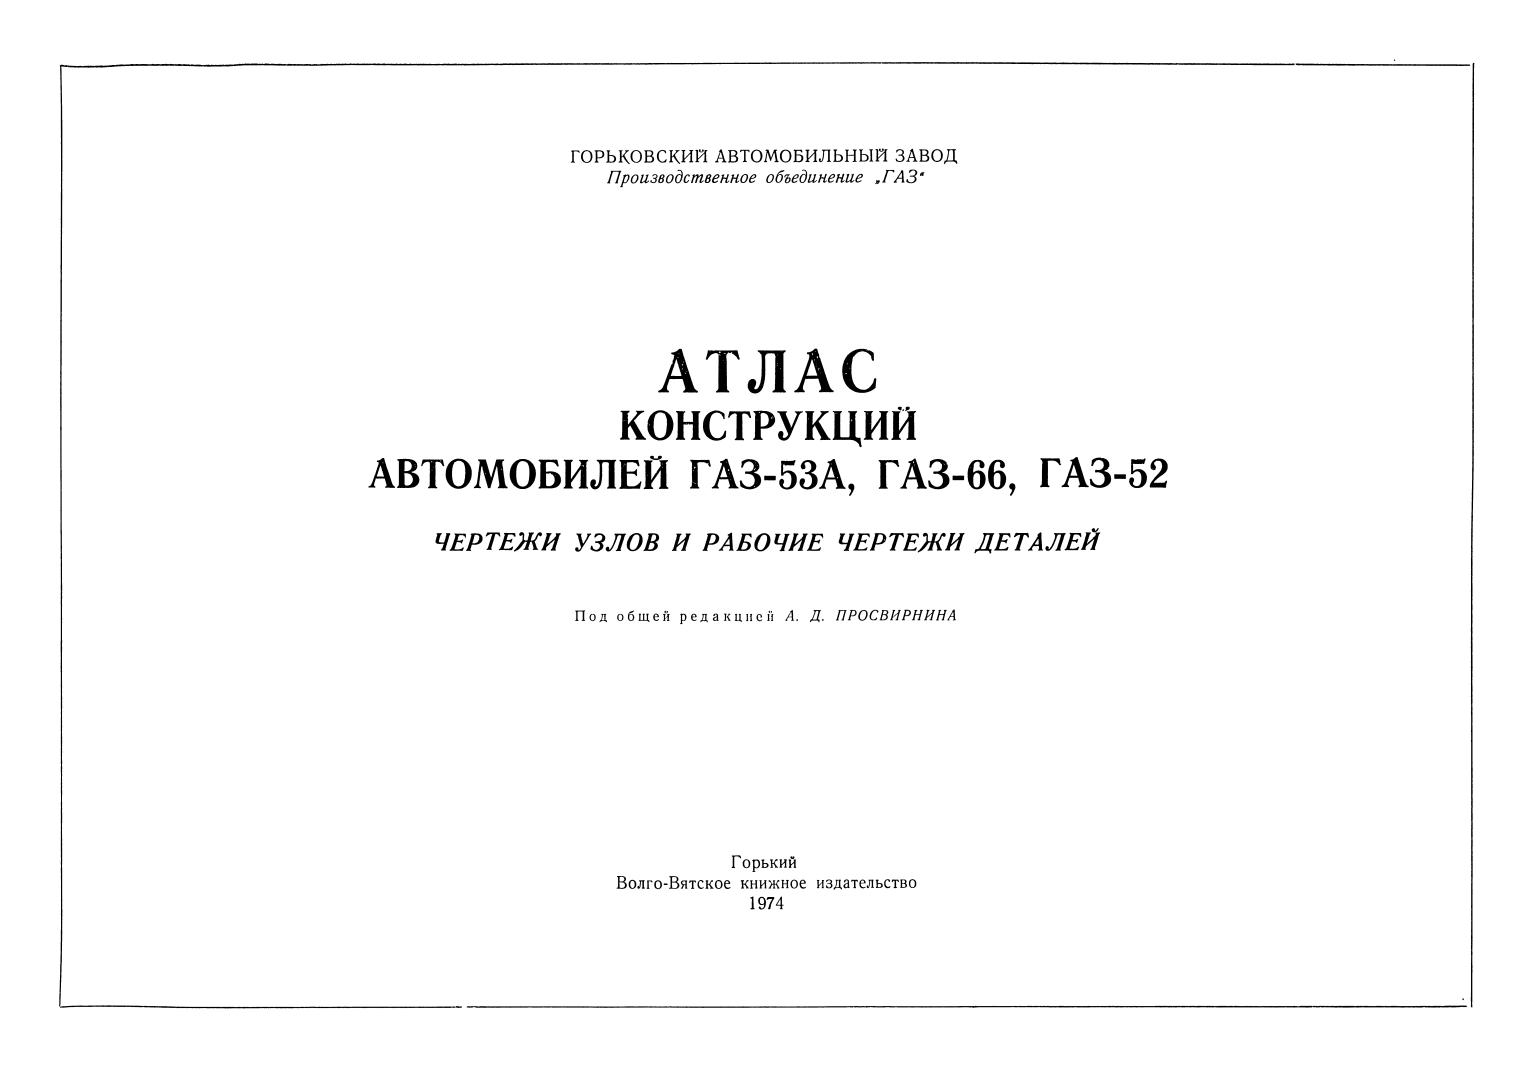 Атлас конструкций автомобилей ГАЗ-53А, ГАЗ-66, ГАЗ-52 - 1974_01.jpg